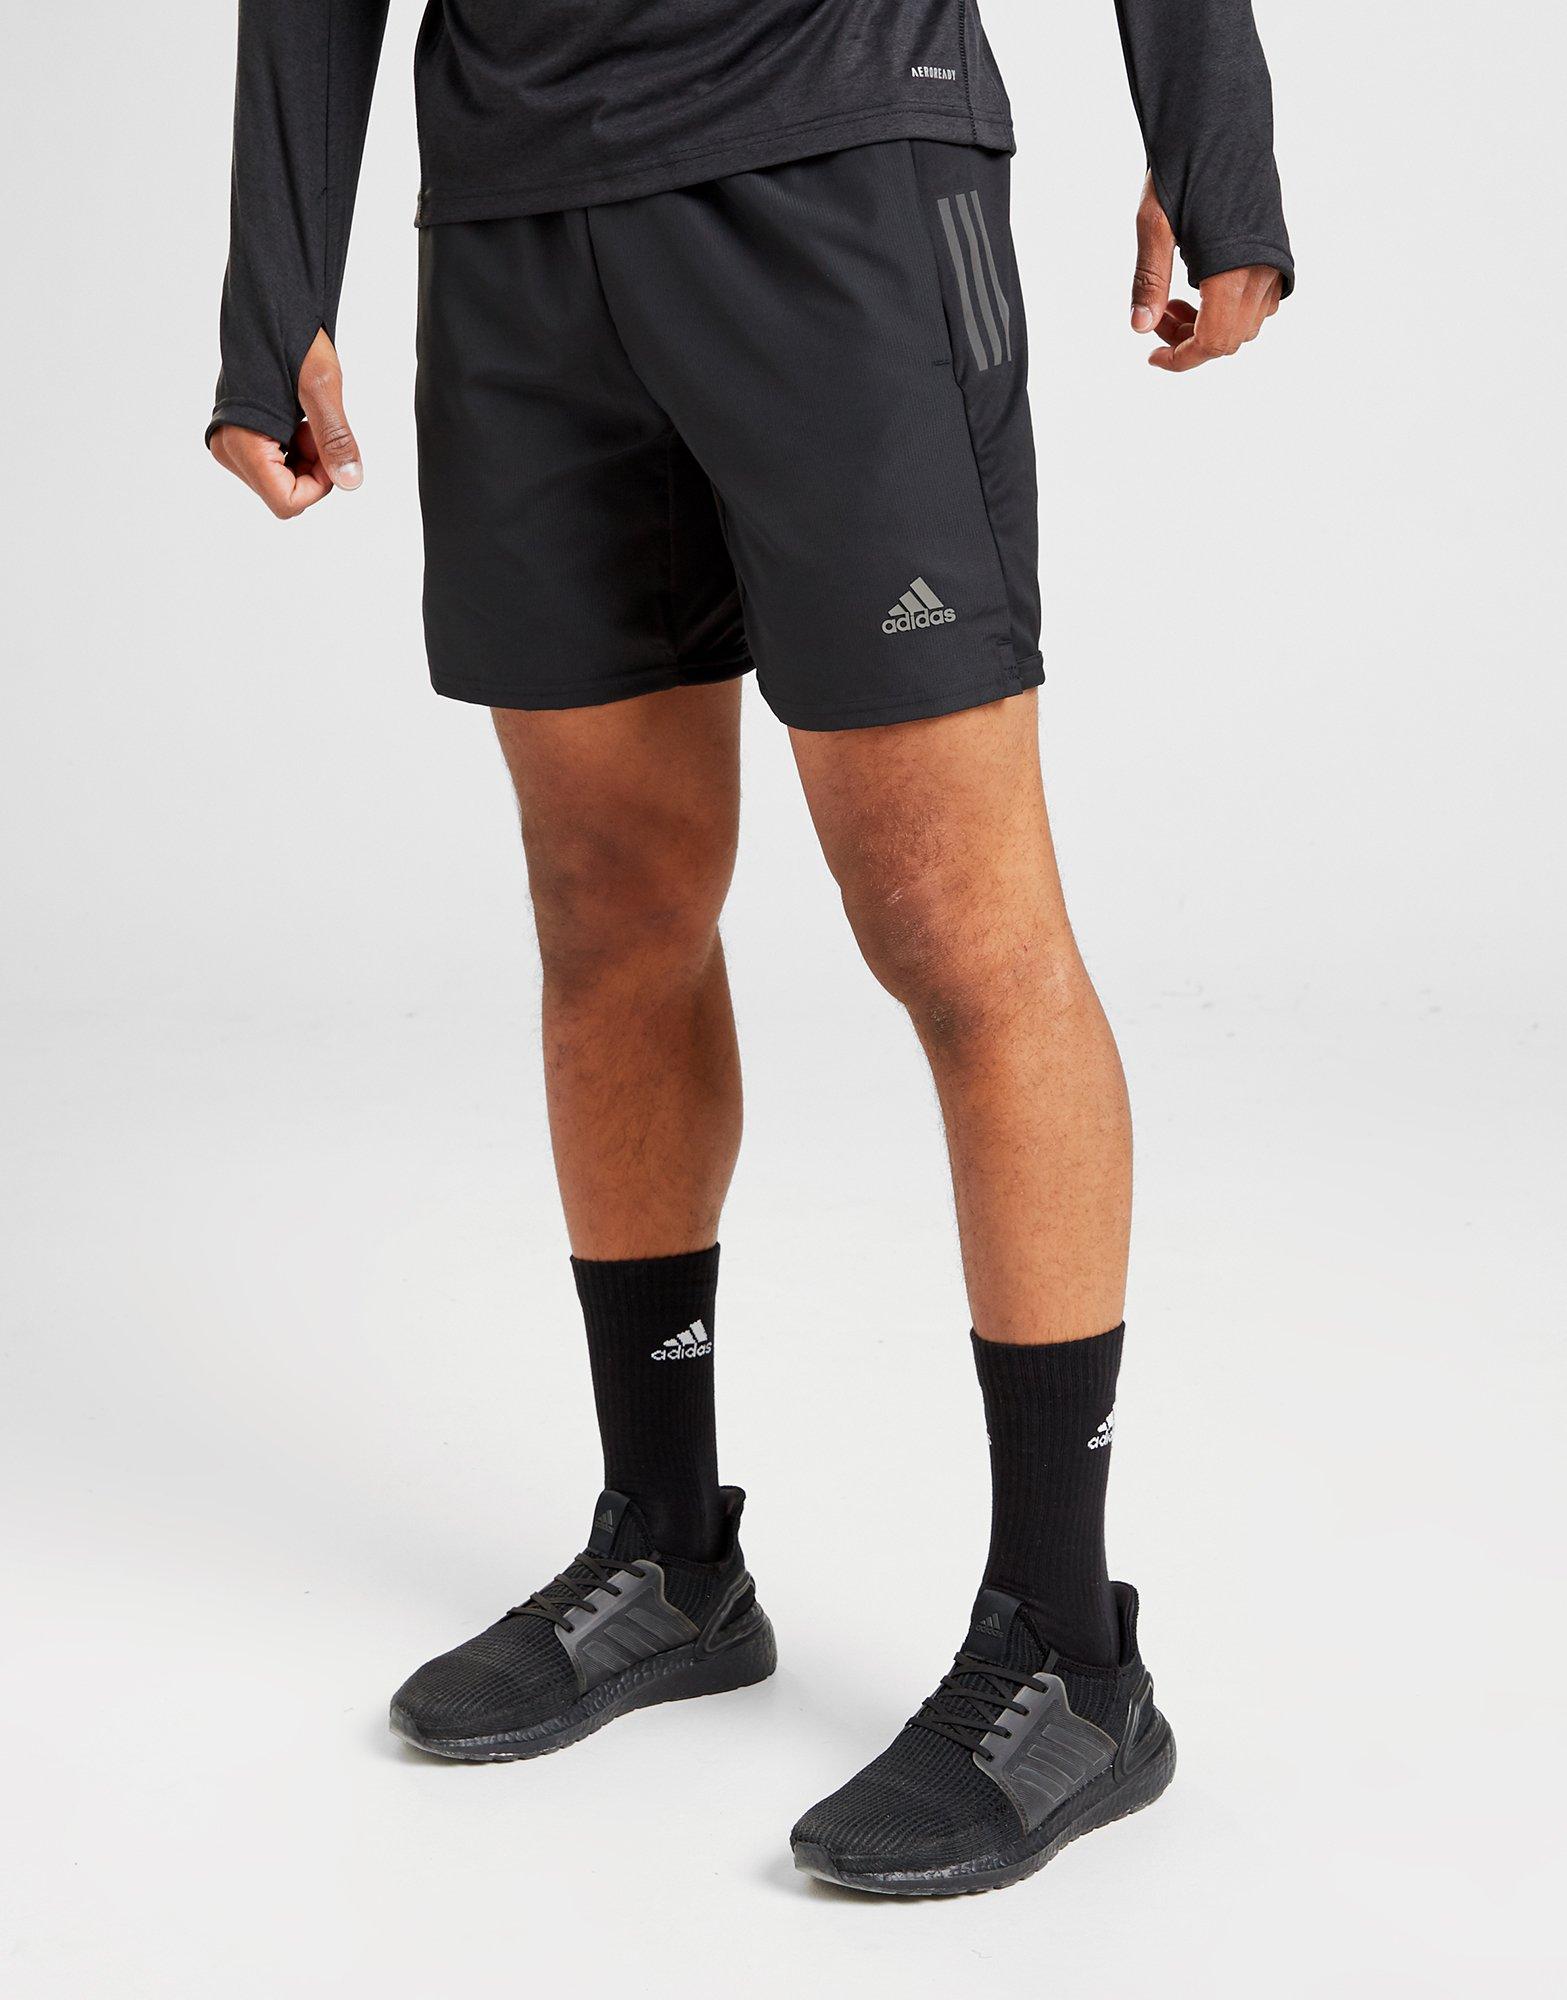 jd sports adidas shorts